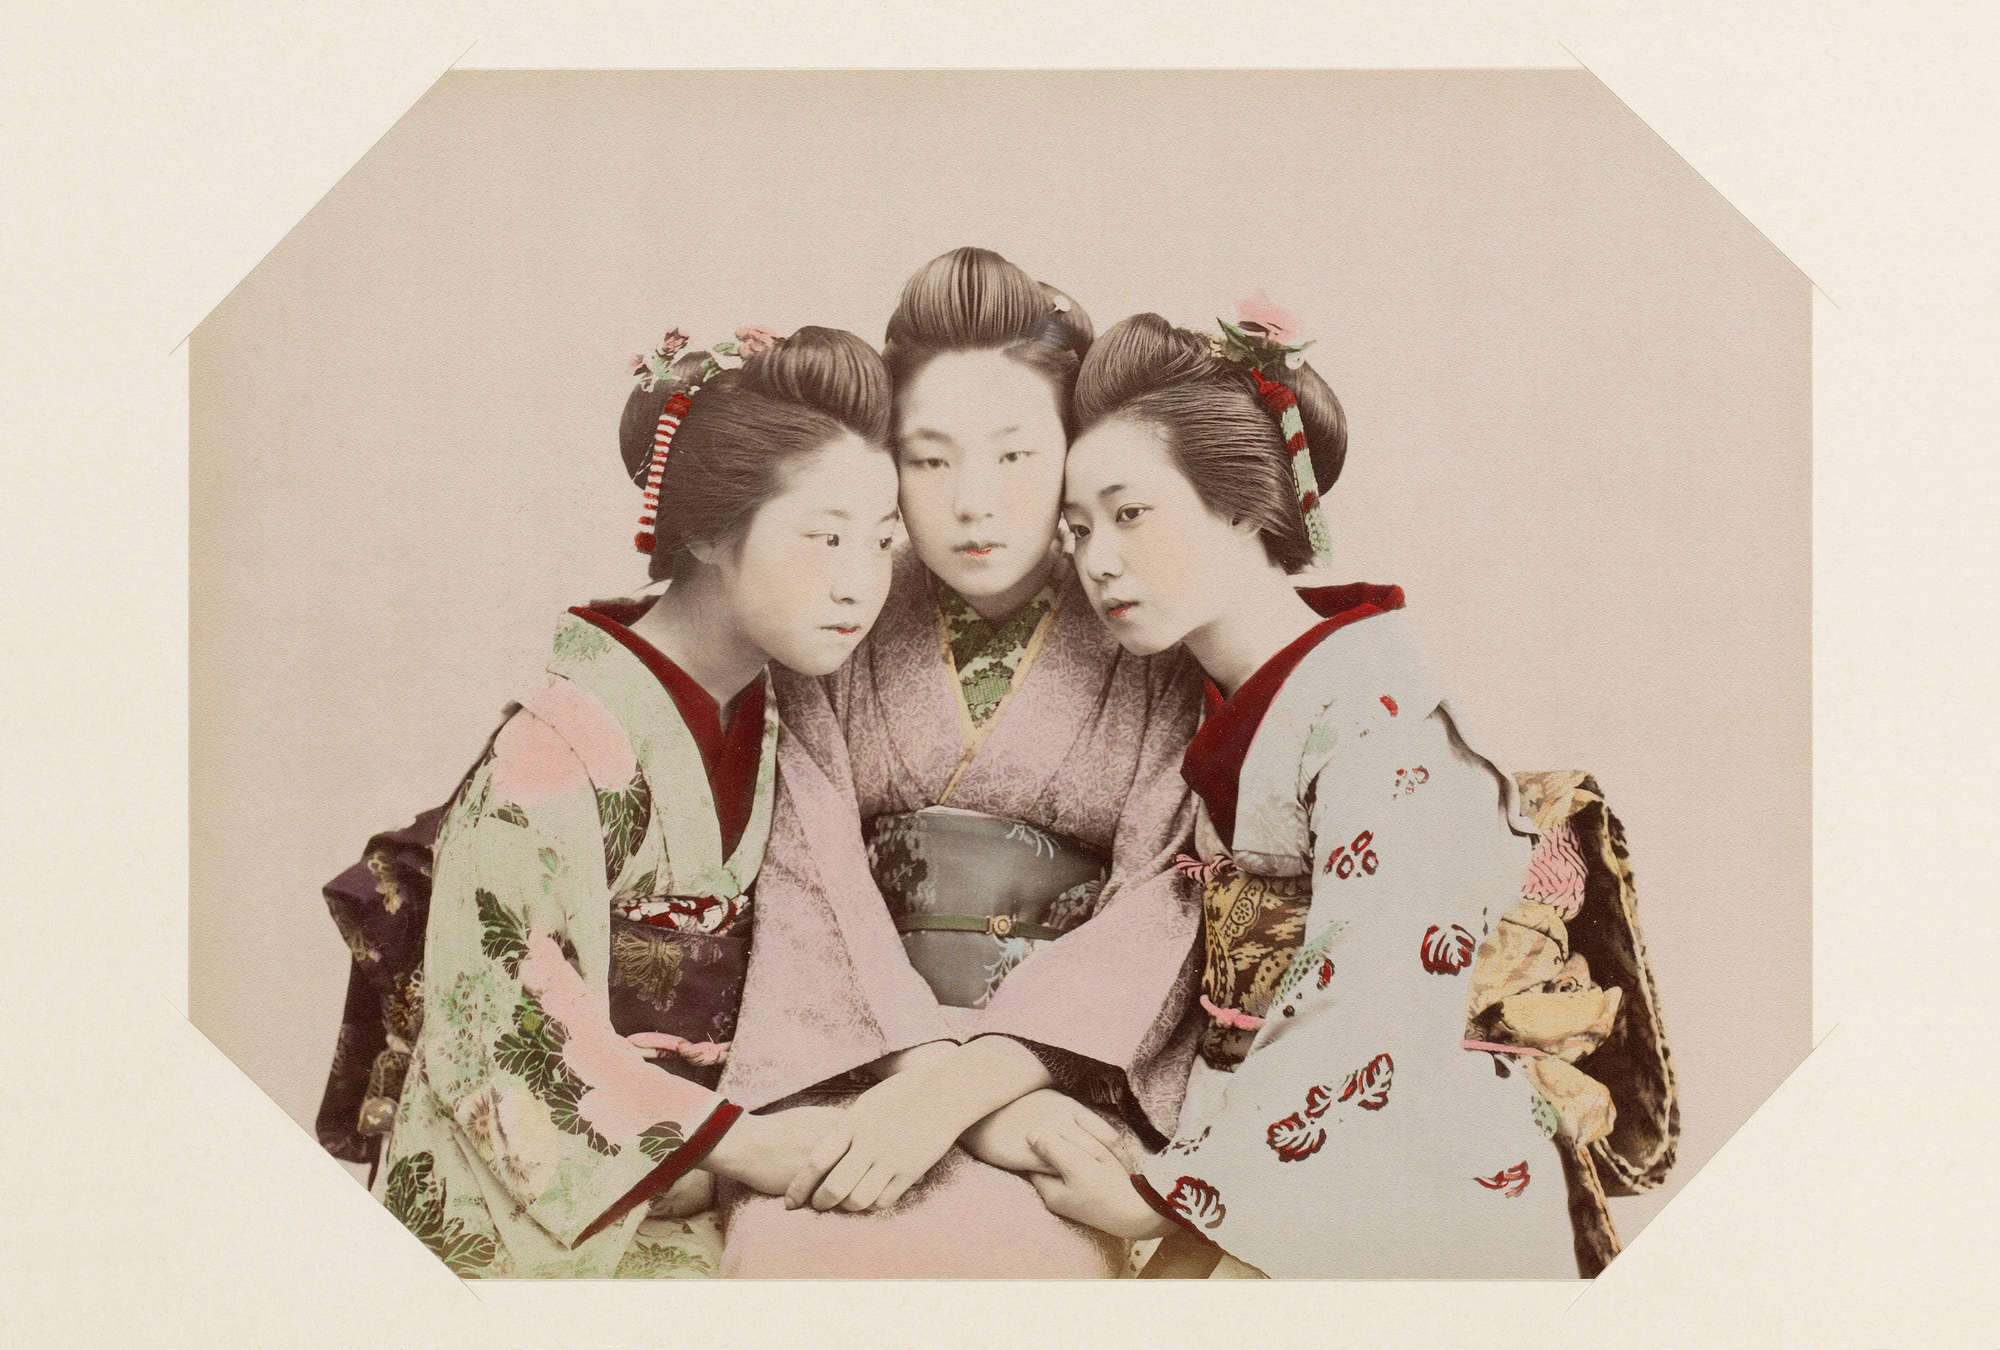             Kyoto 1 – Fototapete Vintage Geisha Portrait mit Bilderrahmen
        